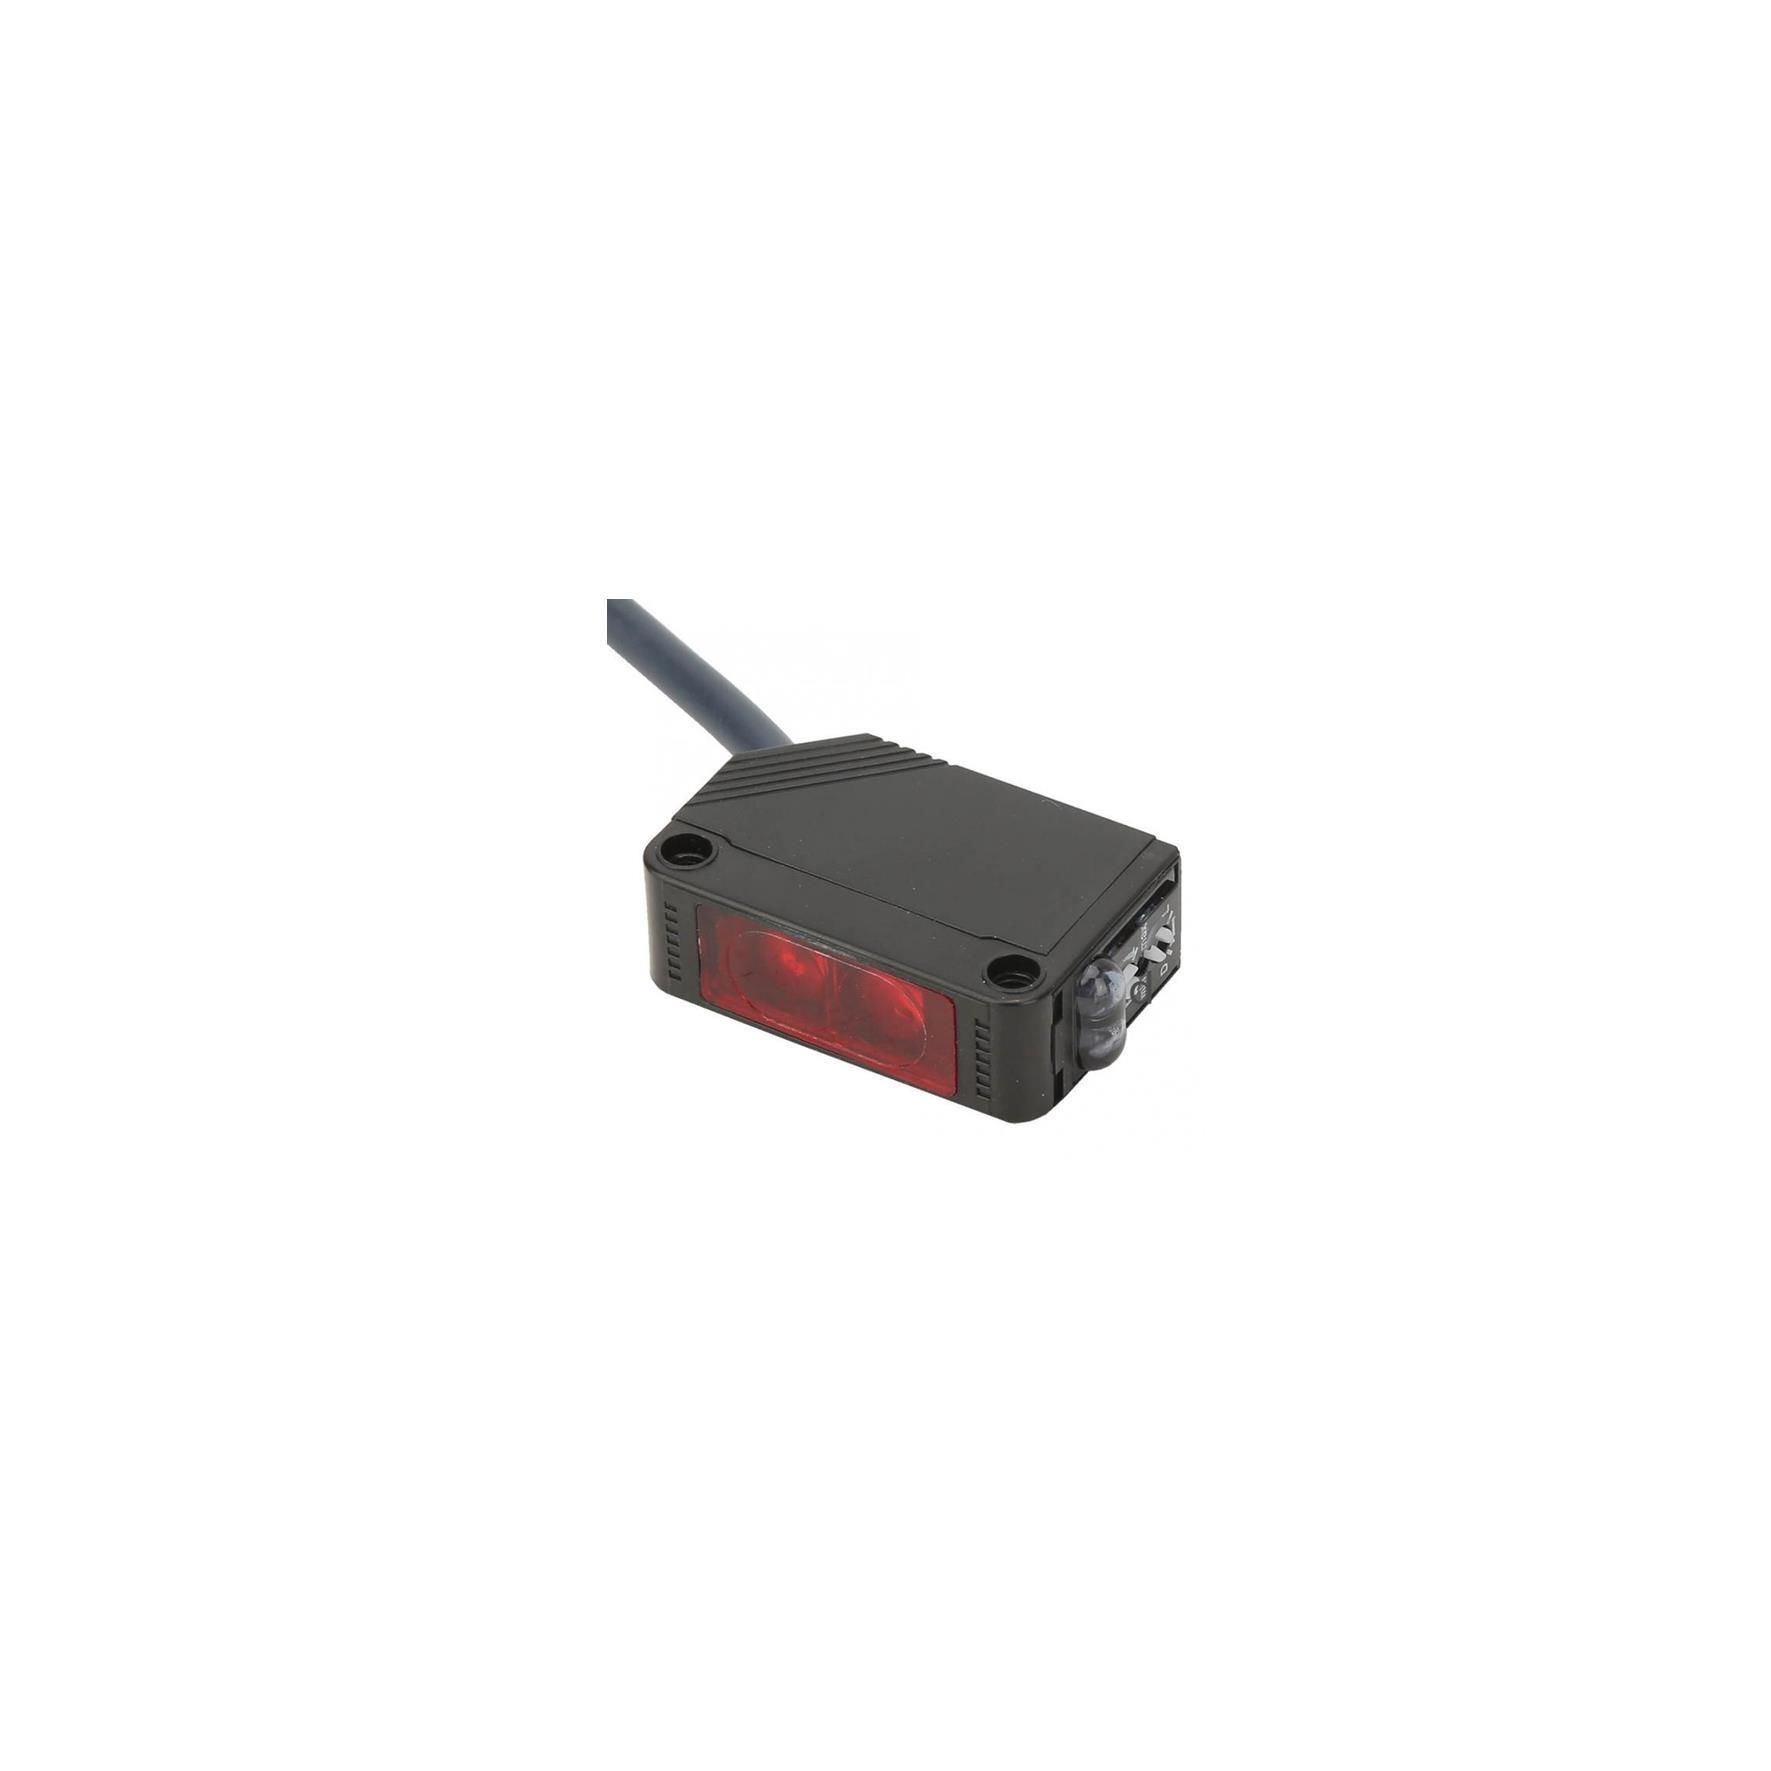 Bin Switch Optical Sensor_MRD088000245